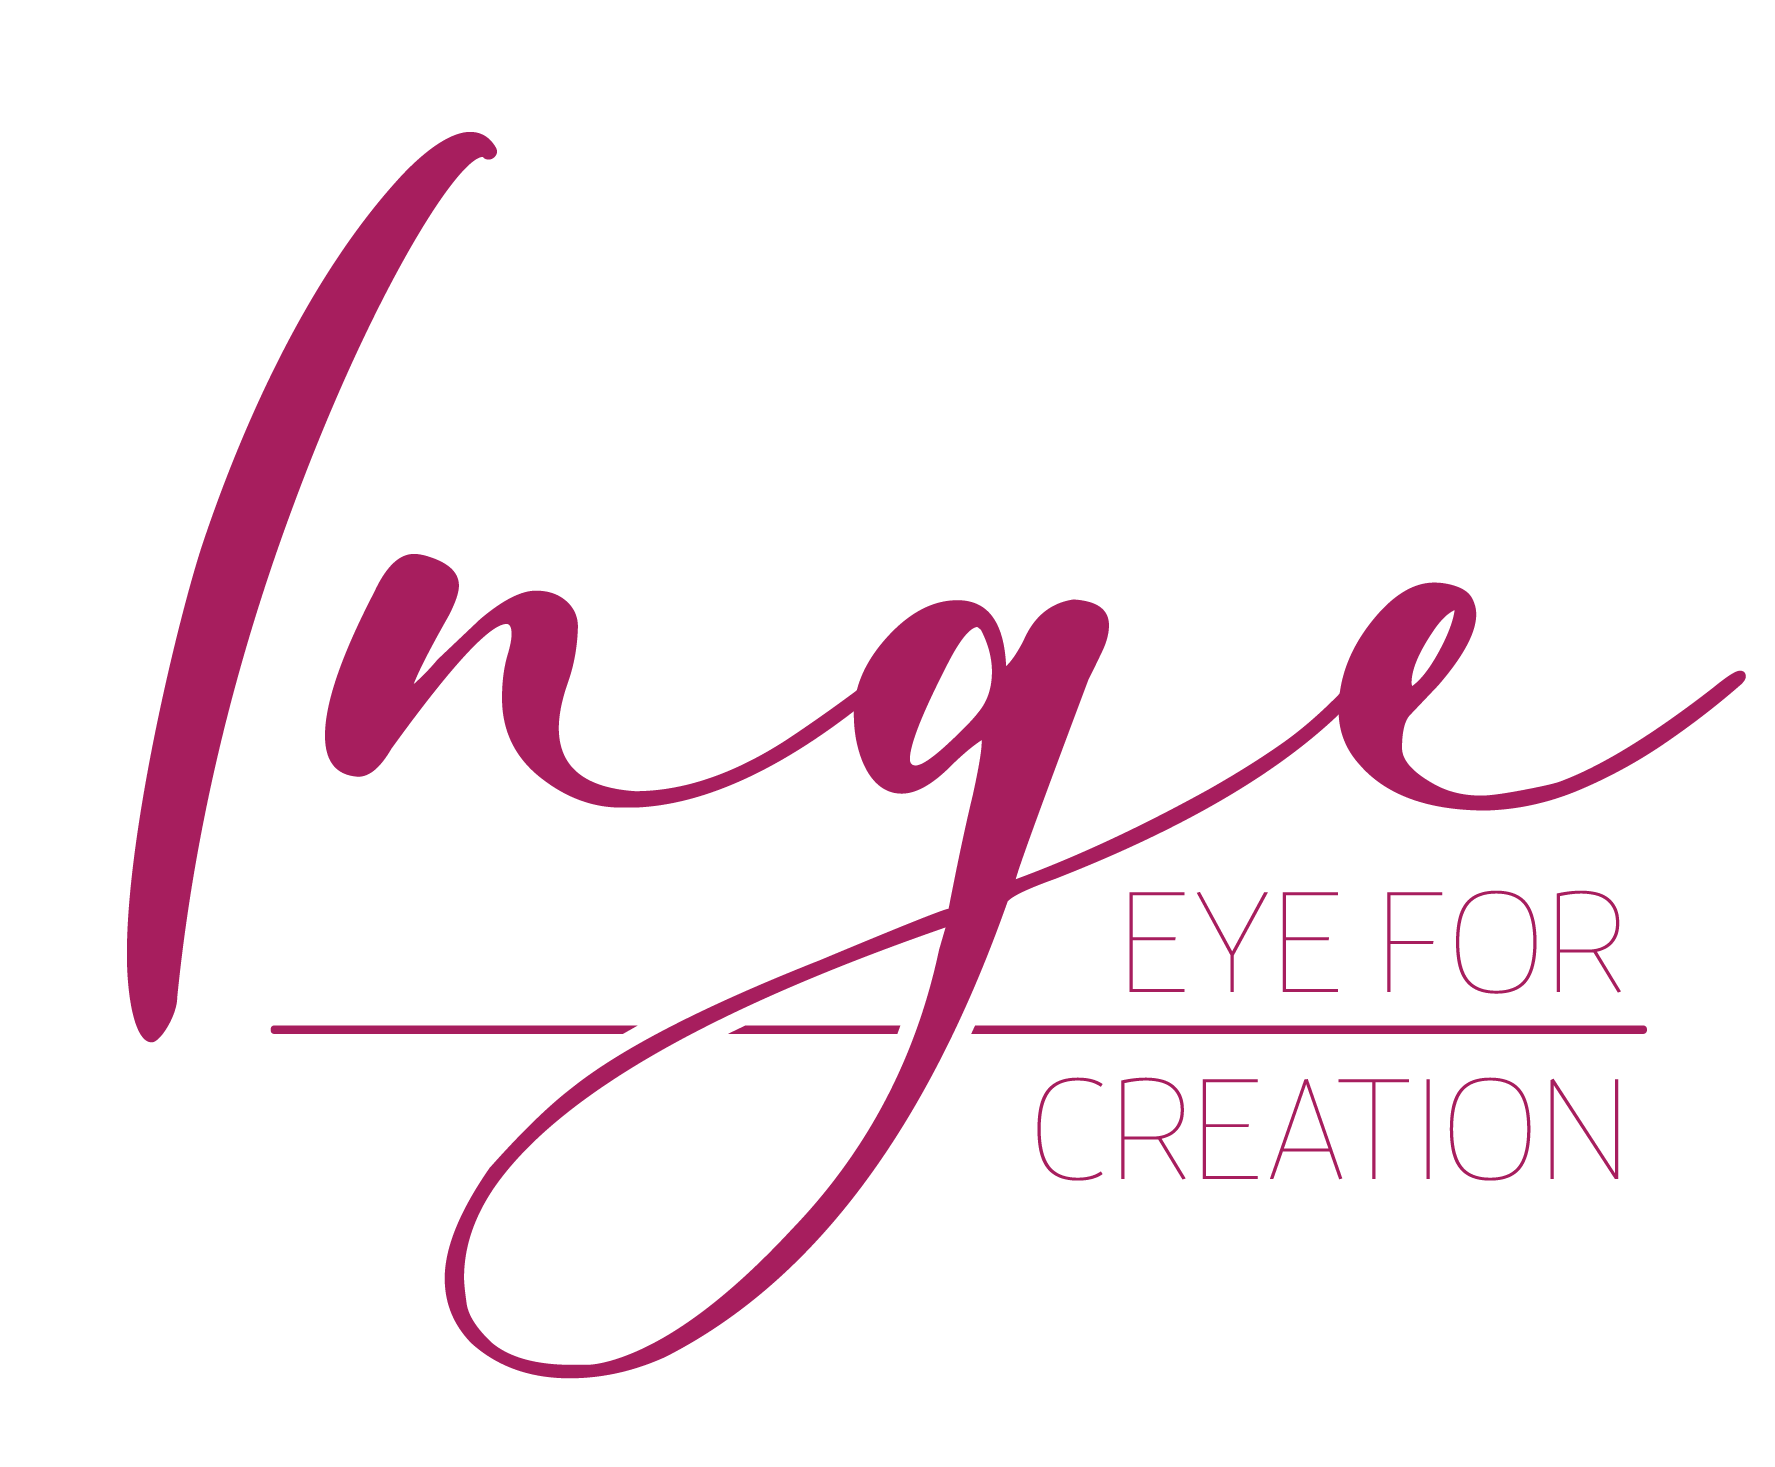 Inge - Eye for creation